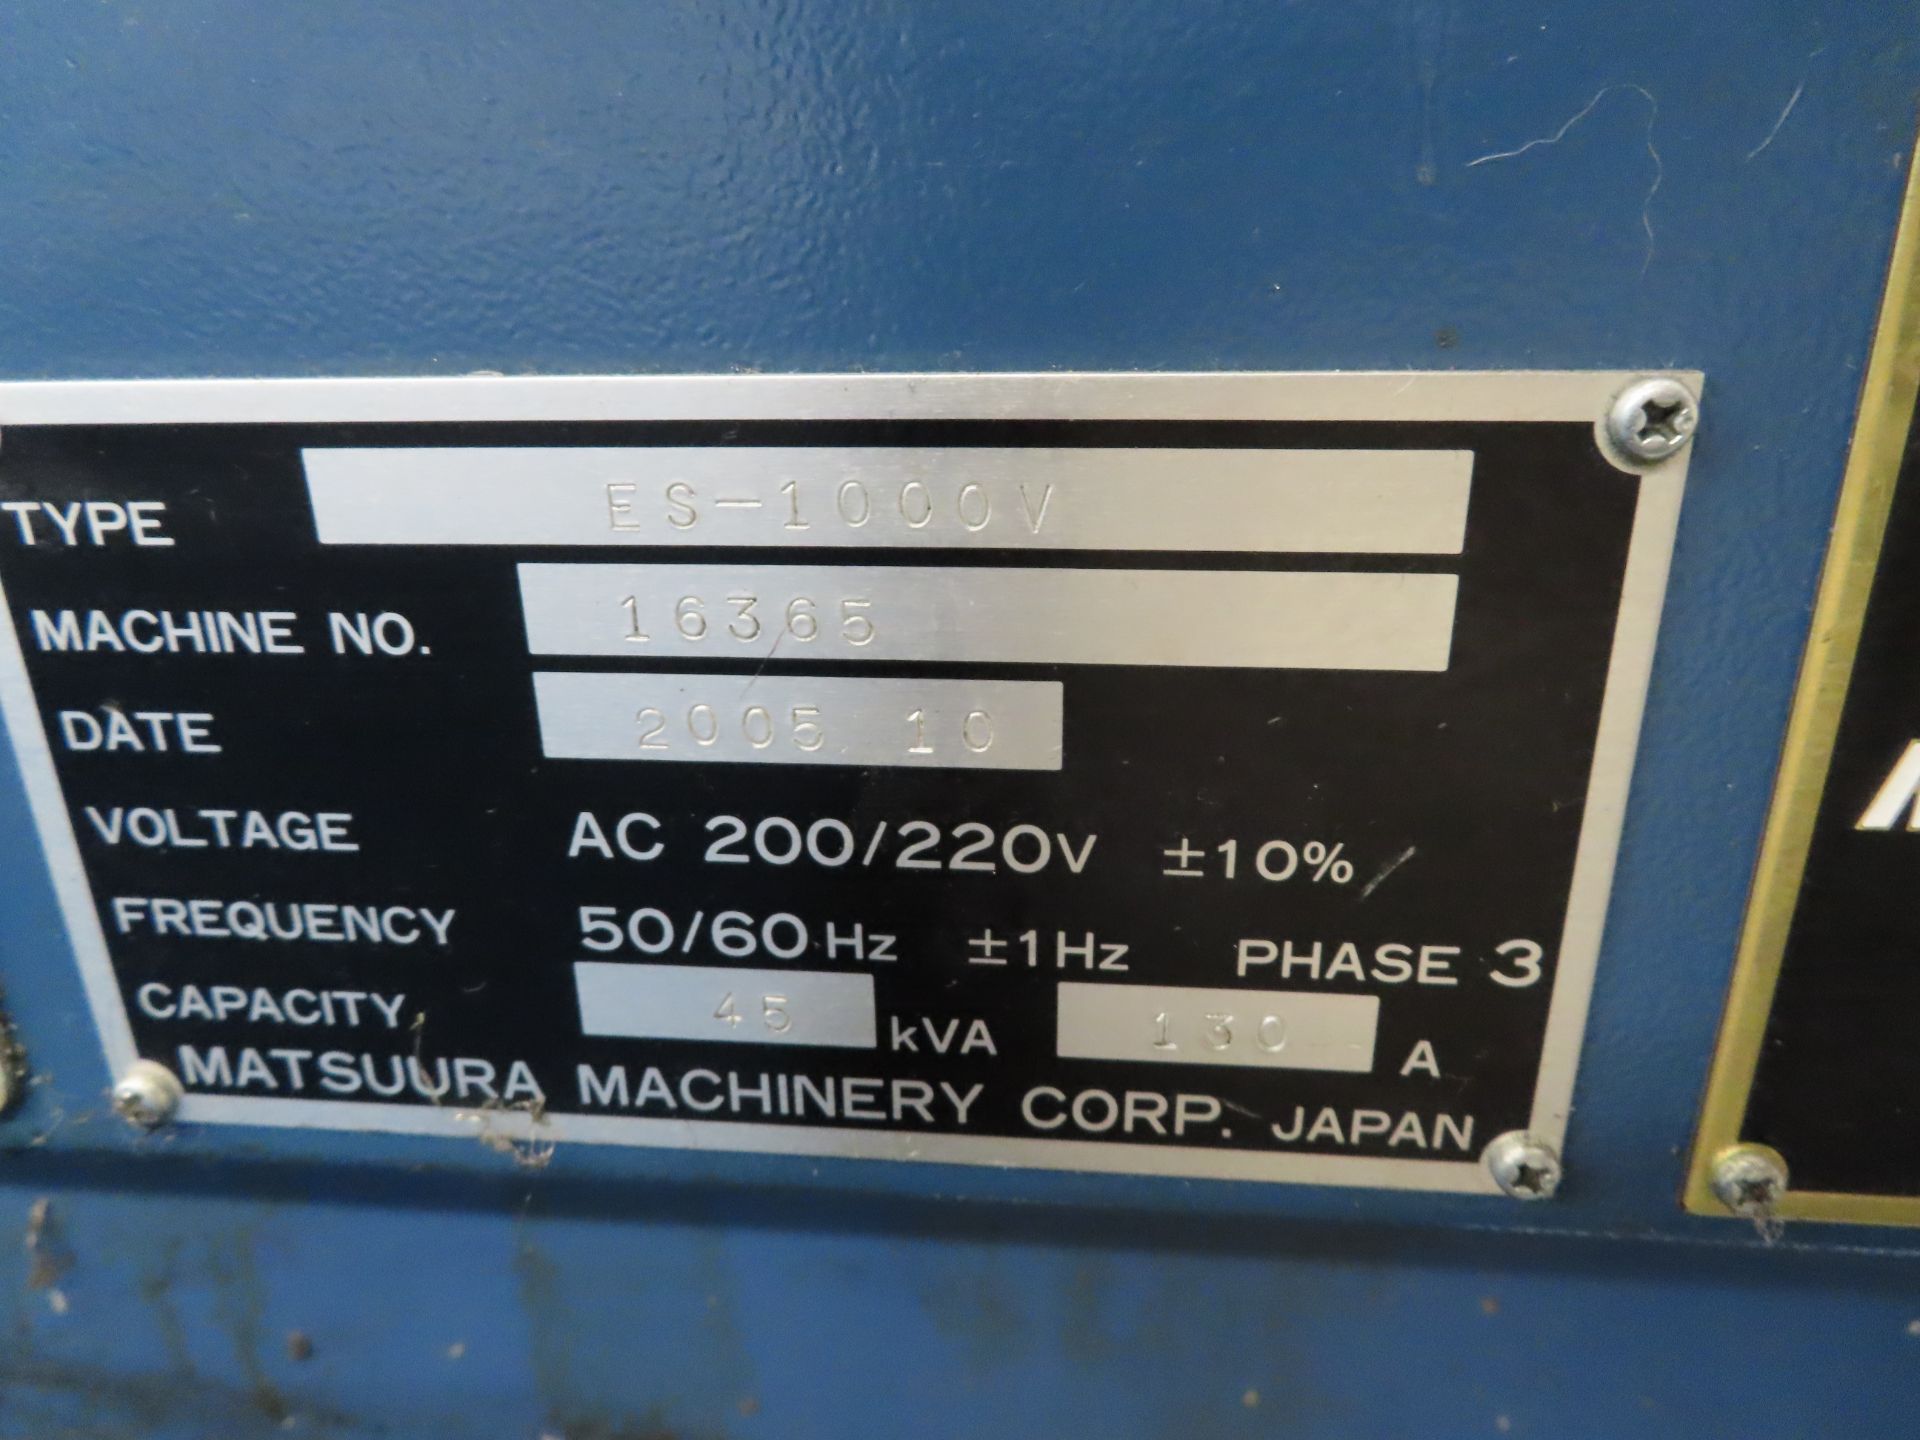 2005 Matsuura ES1000V CNC Vertical Machining Center - Image 17 of 17